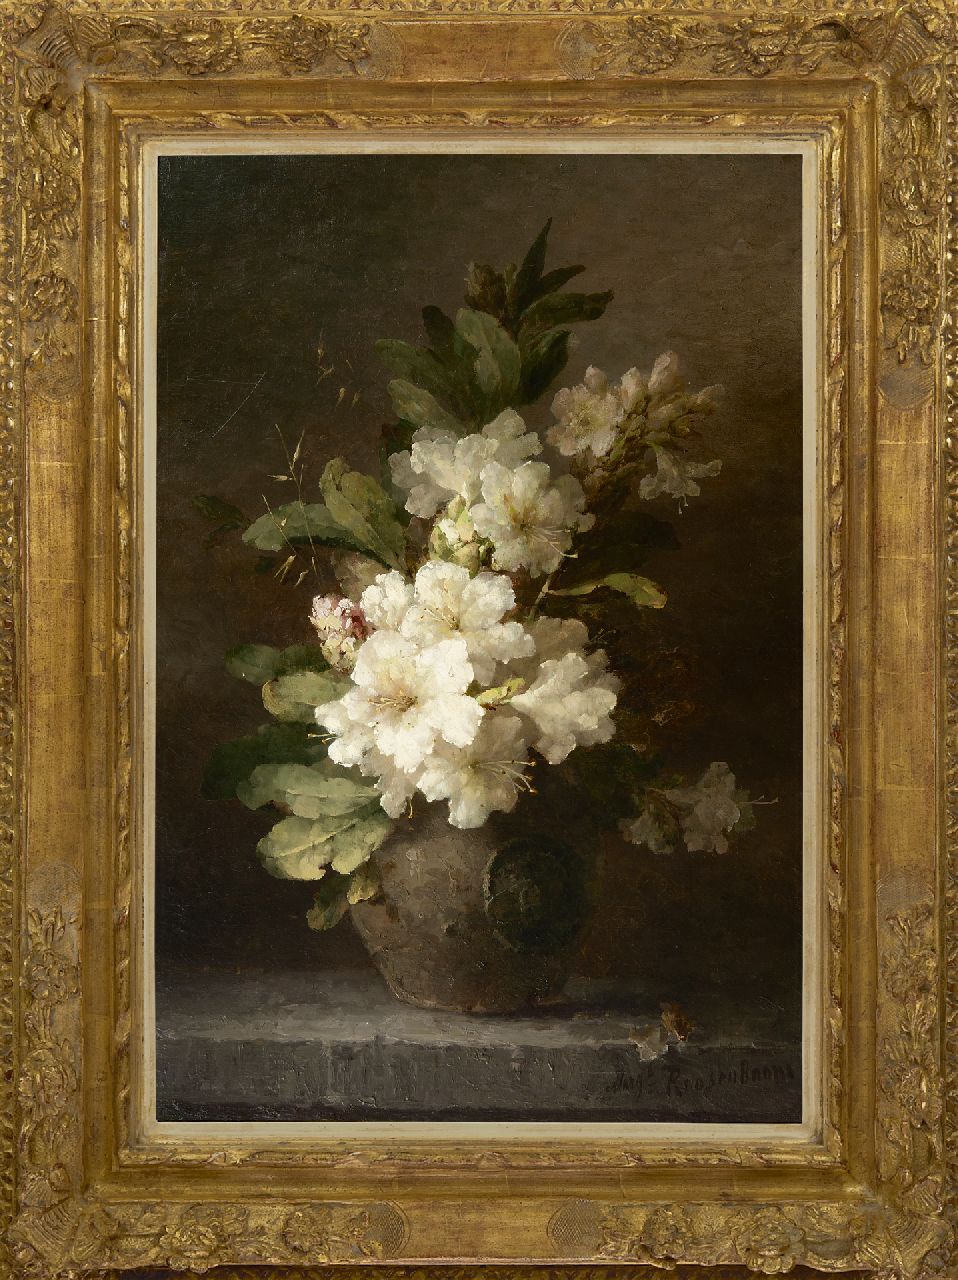 Roosenboom M.C.J.W.H.  | 'Margaretha' Cornelia Johanna Wilhelmina Henriëtta Roosenboom, Rododendrontakken in stenen kruik, olieverf op doek 64,8 x 43,5 cm, gesigneerd rechtsonder